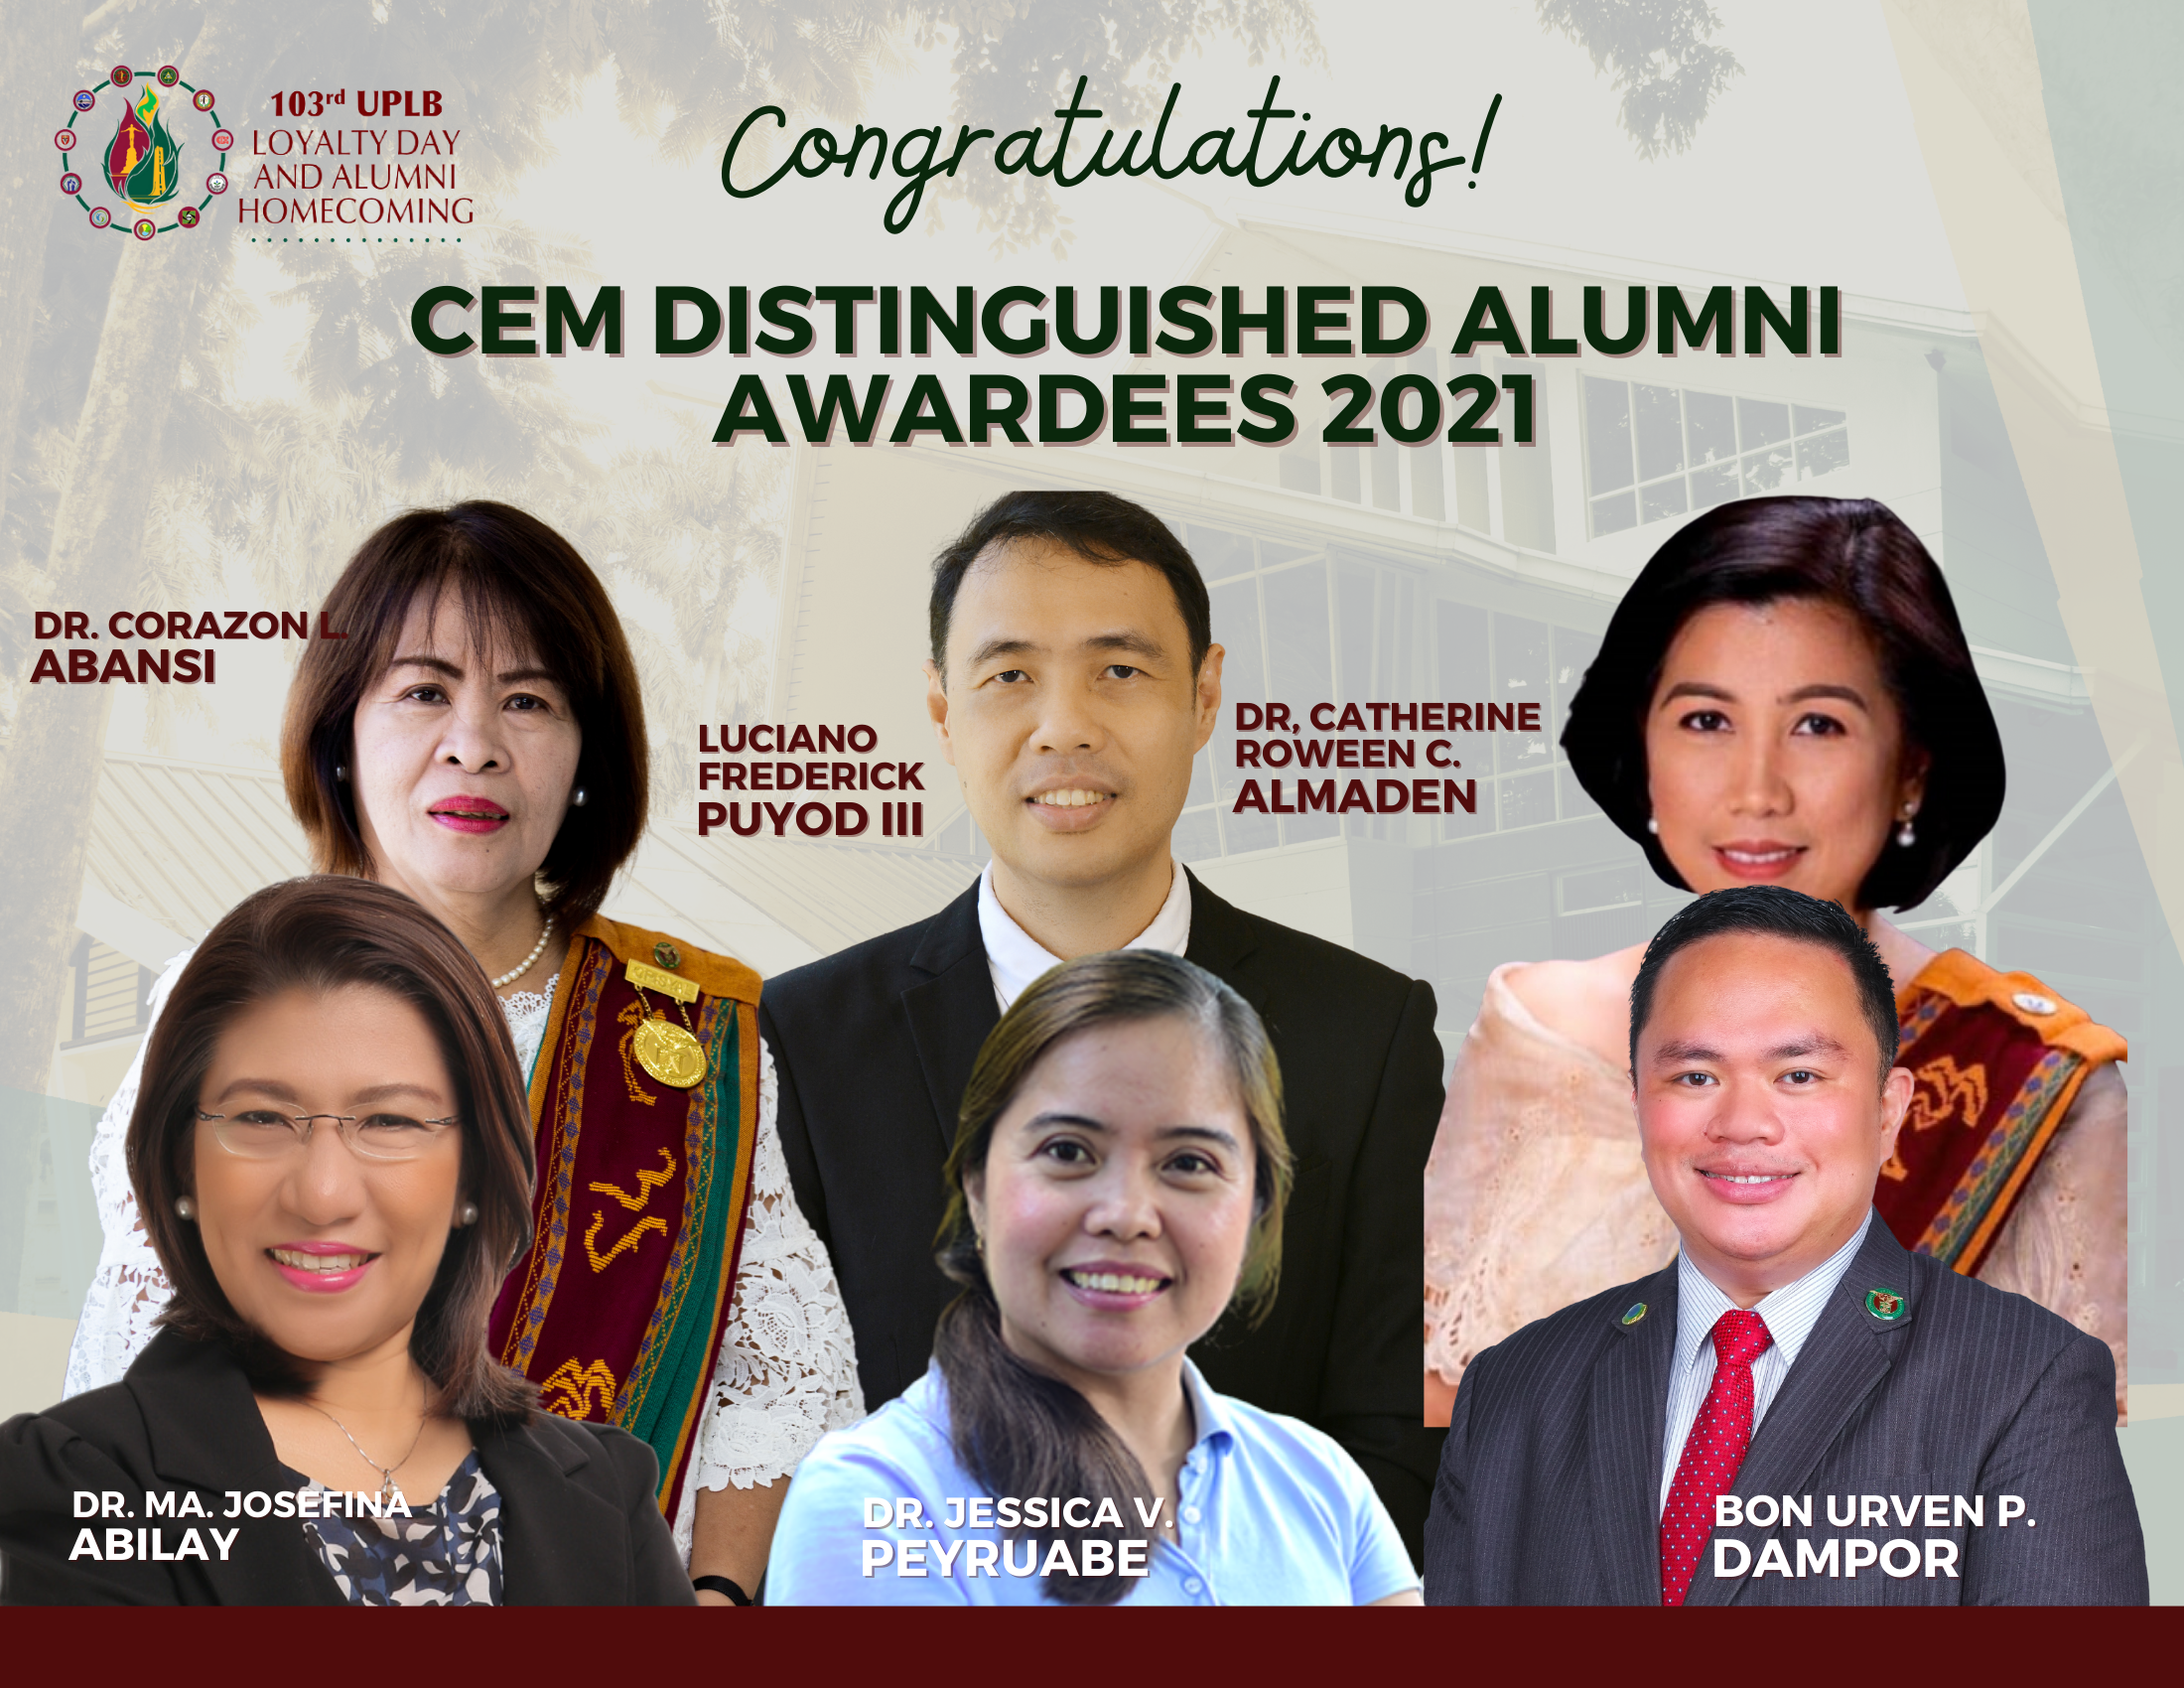 Six Alumni Awarded as  CEM Distinguished Alumni Awardees for UPLB’s 103rd Loyalty Day